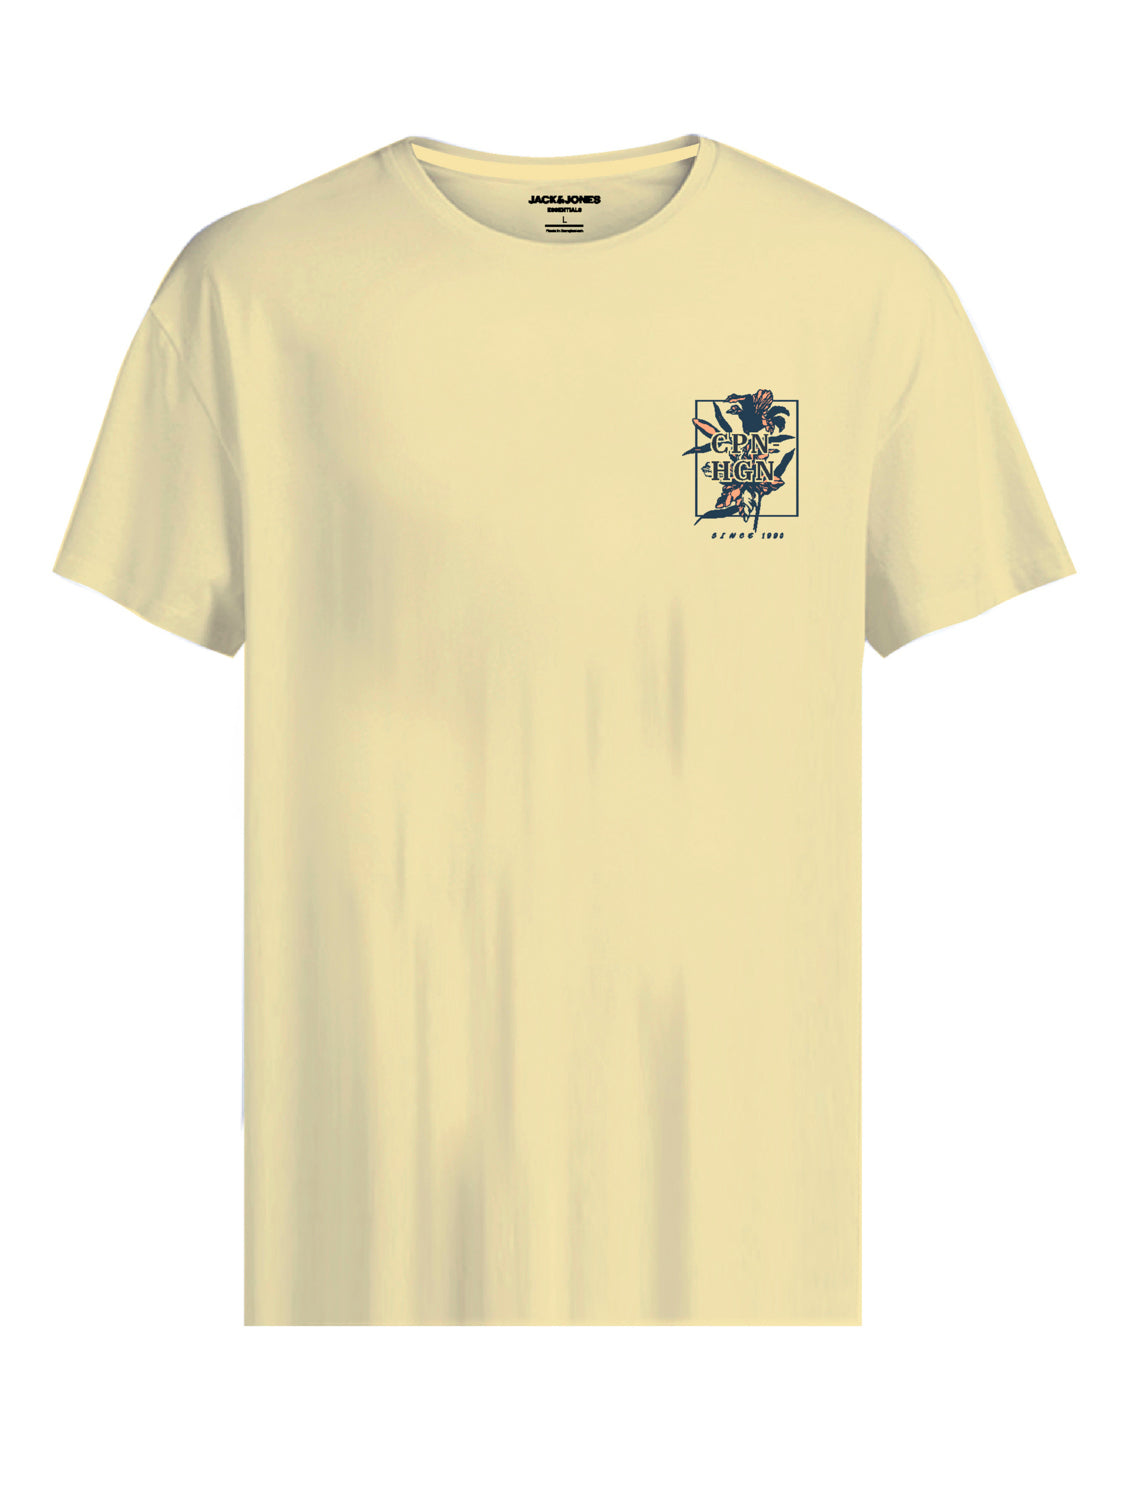 JORSTAR T-Shirt - French Vanilla